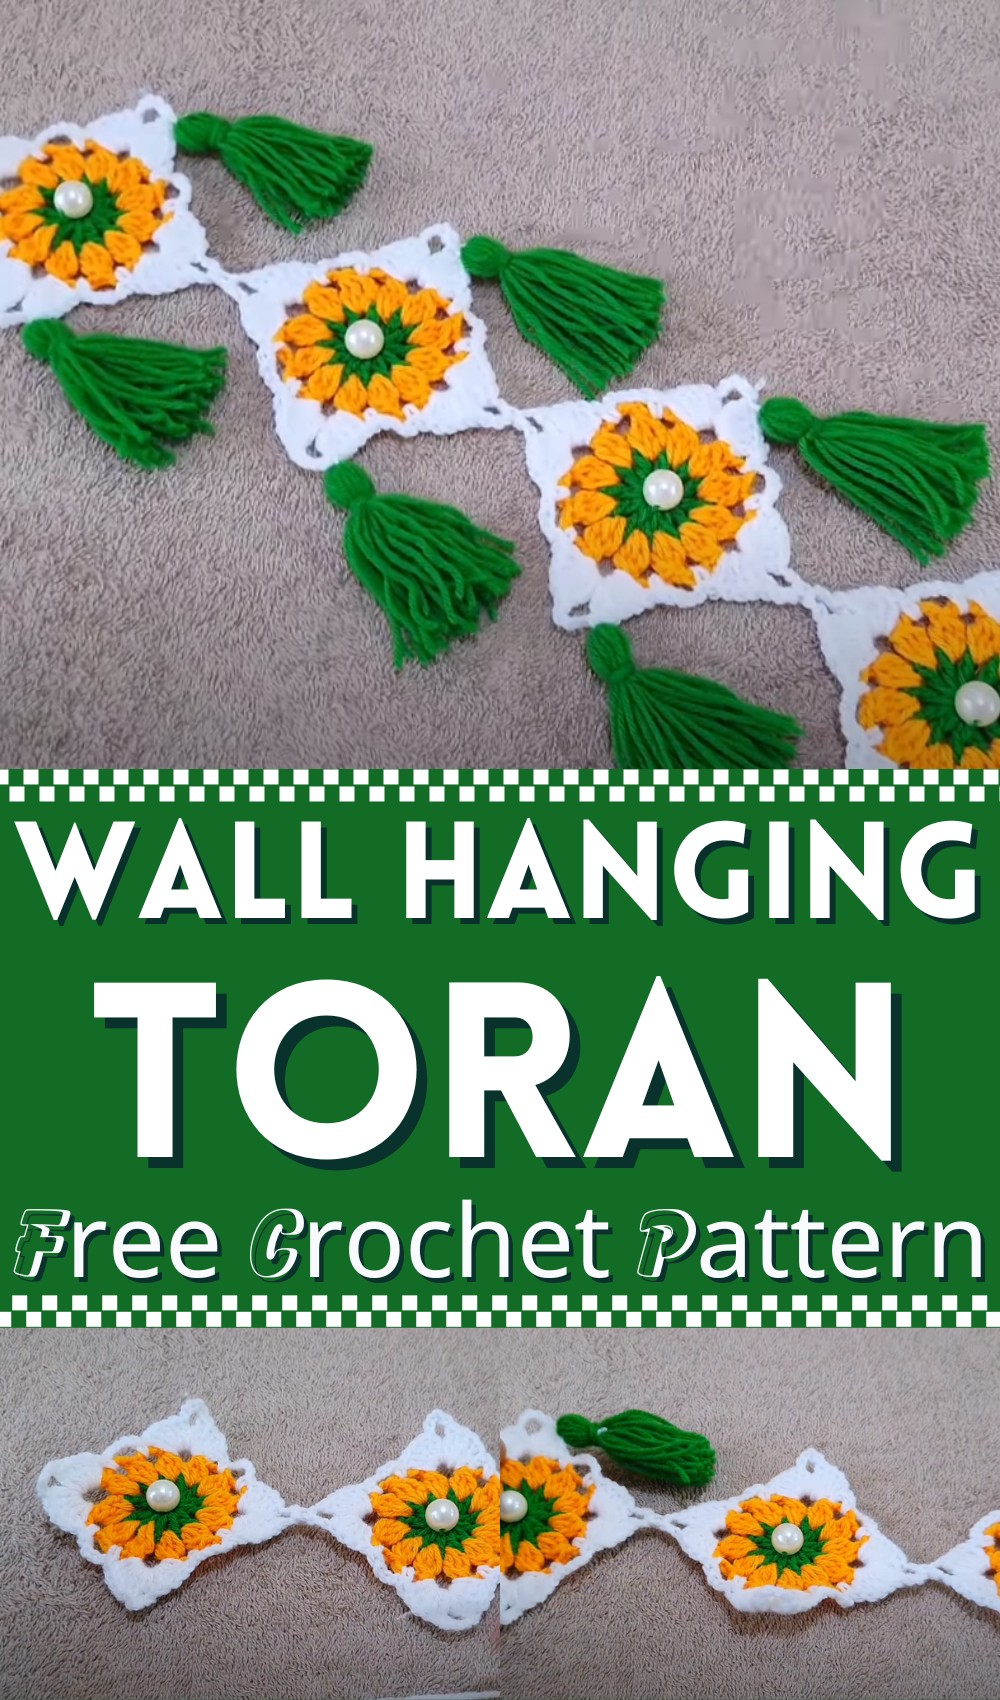 Crochet Wall Hanging Toran